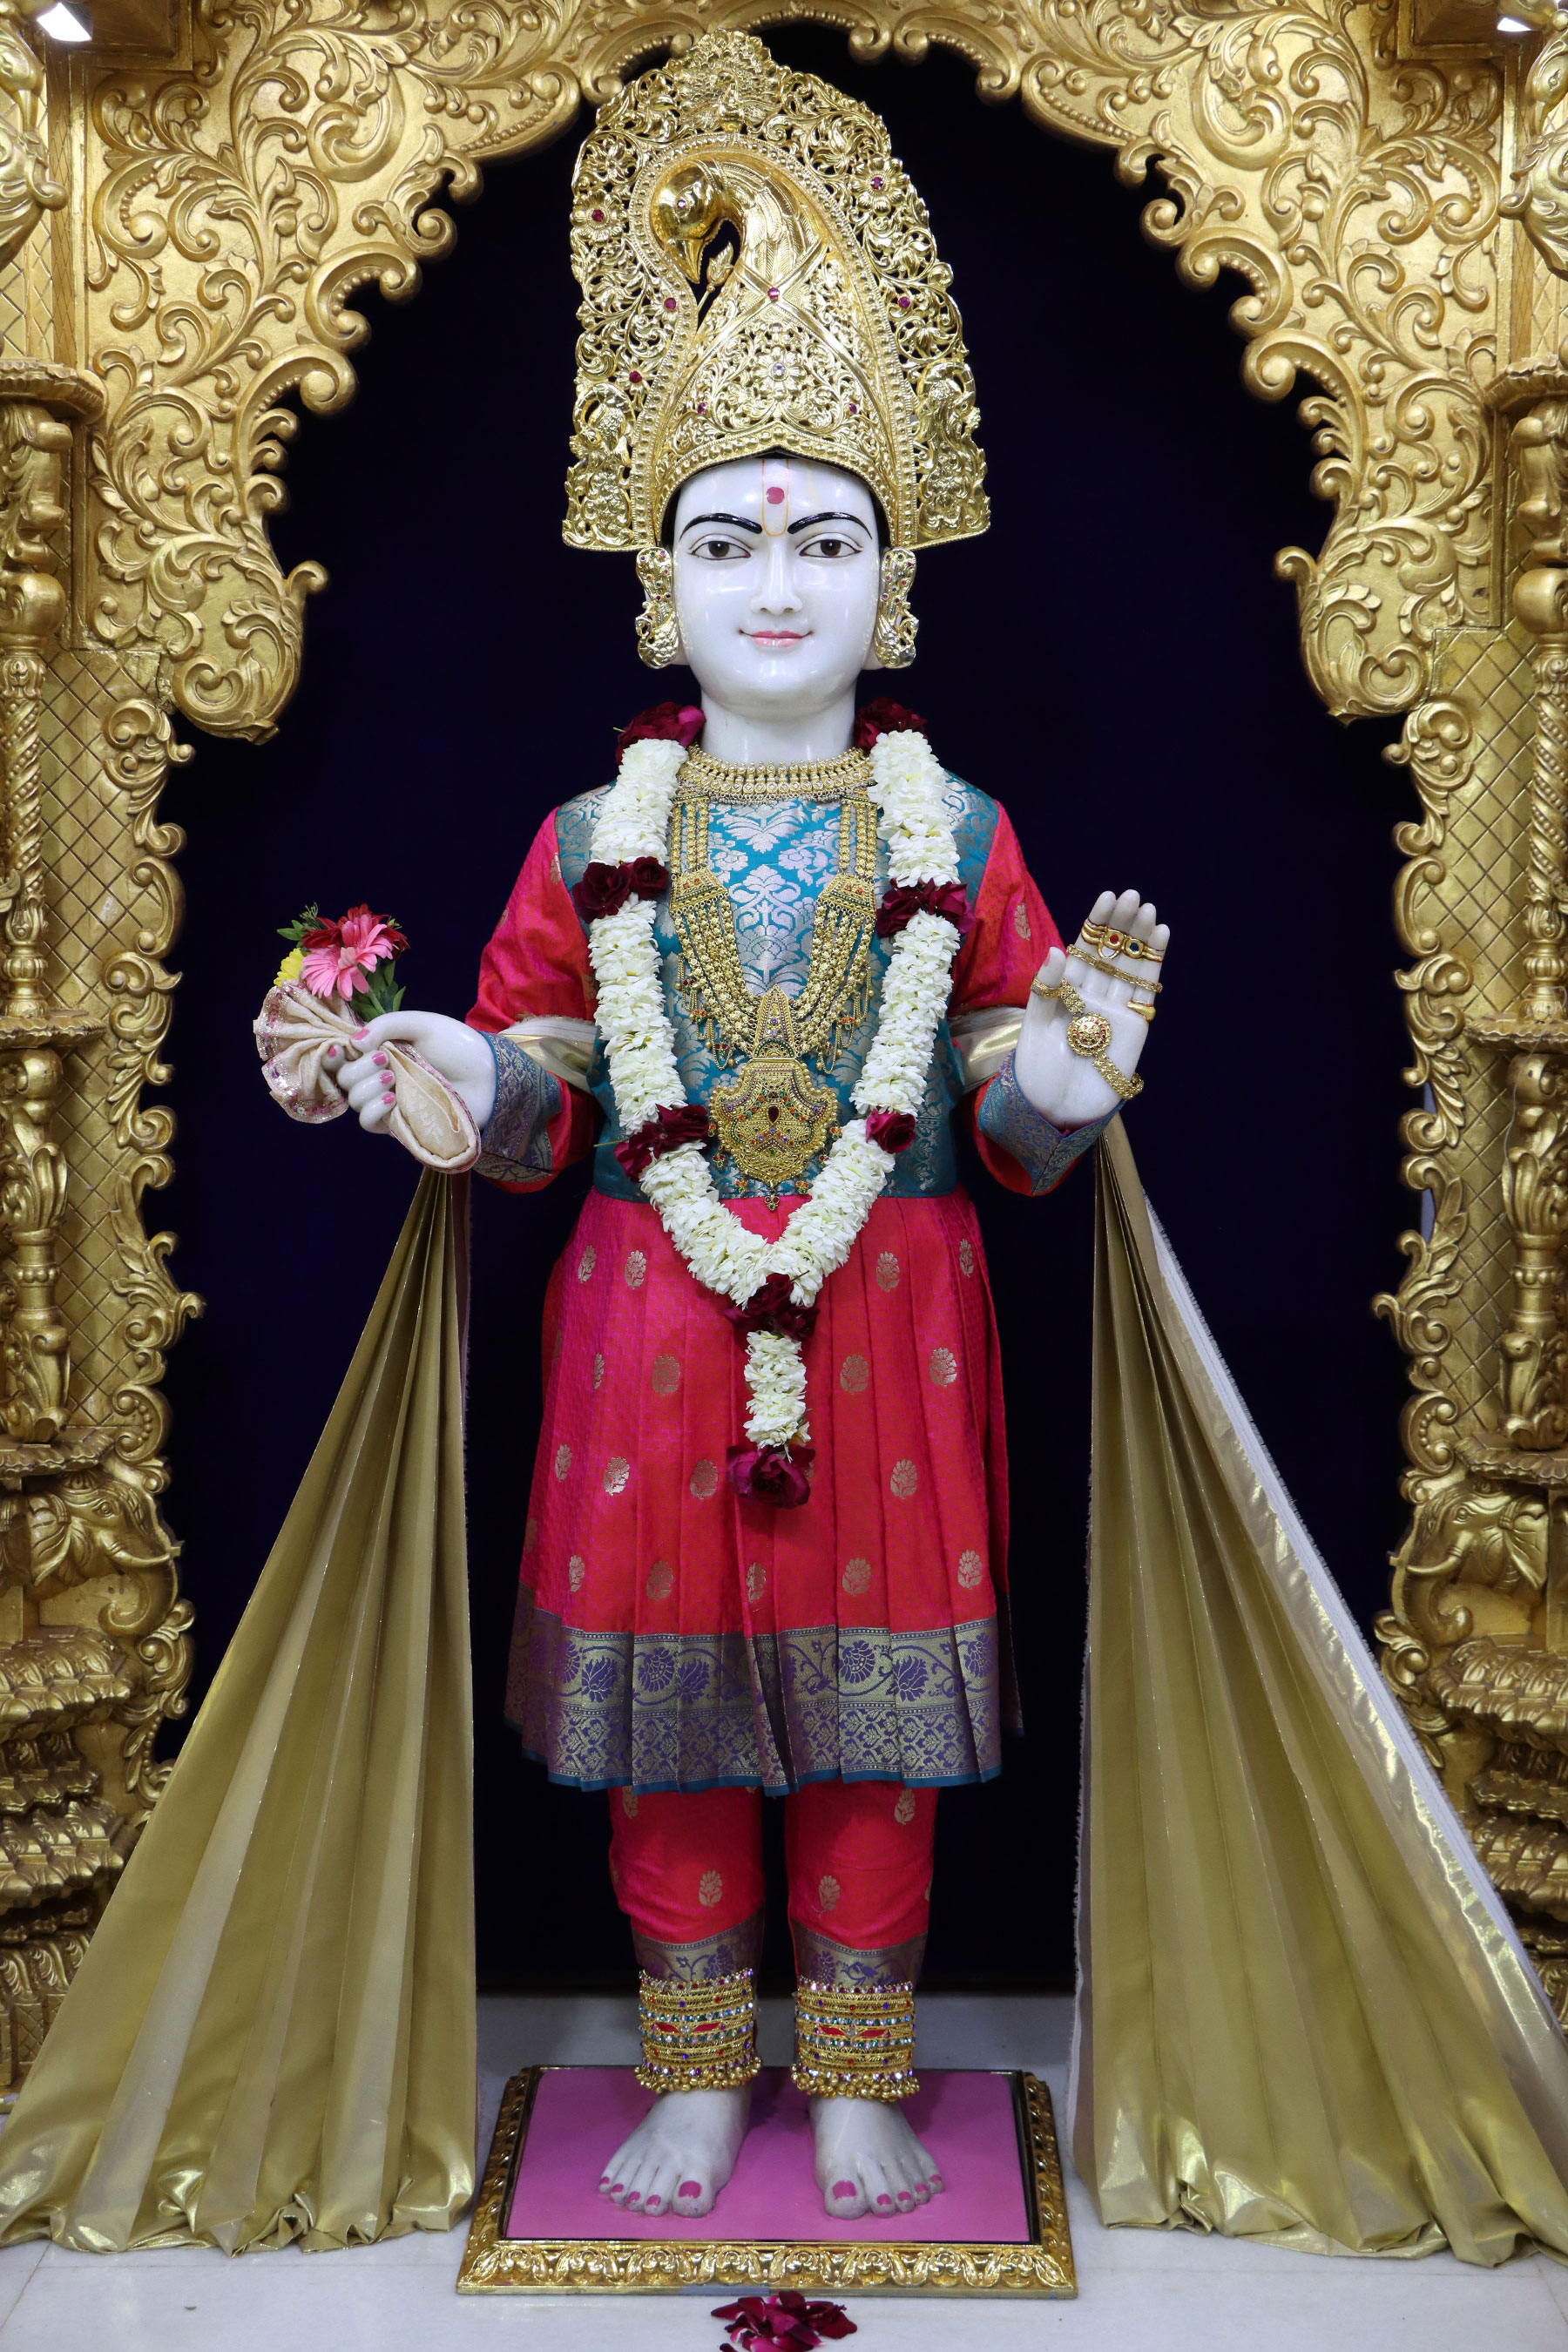 SMVS Swaminarayan Mandir - Vasna